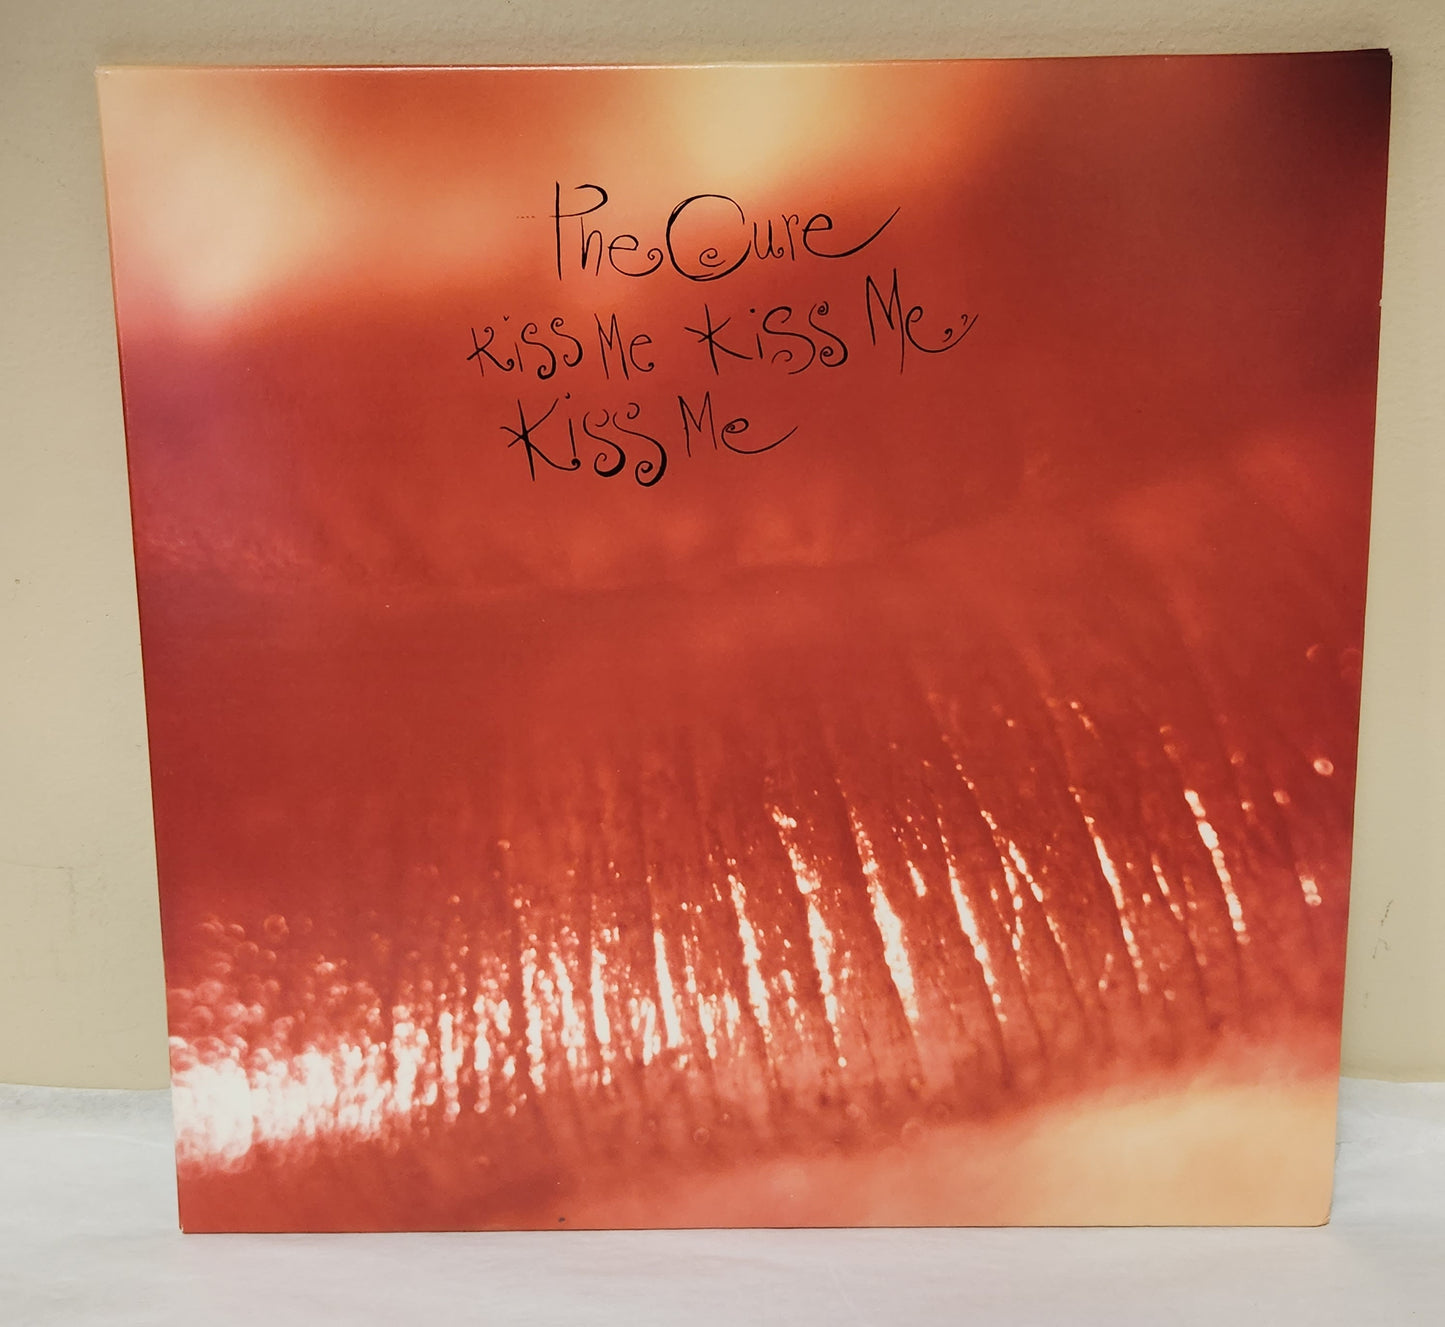 The Cure "Kiss Me Kiss Me Kiss Me" 2013 Ltd Ed 2xLP Alt Rock Reissue on Red Vinyl